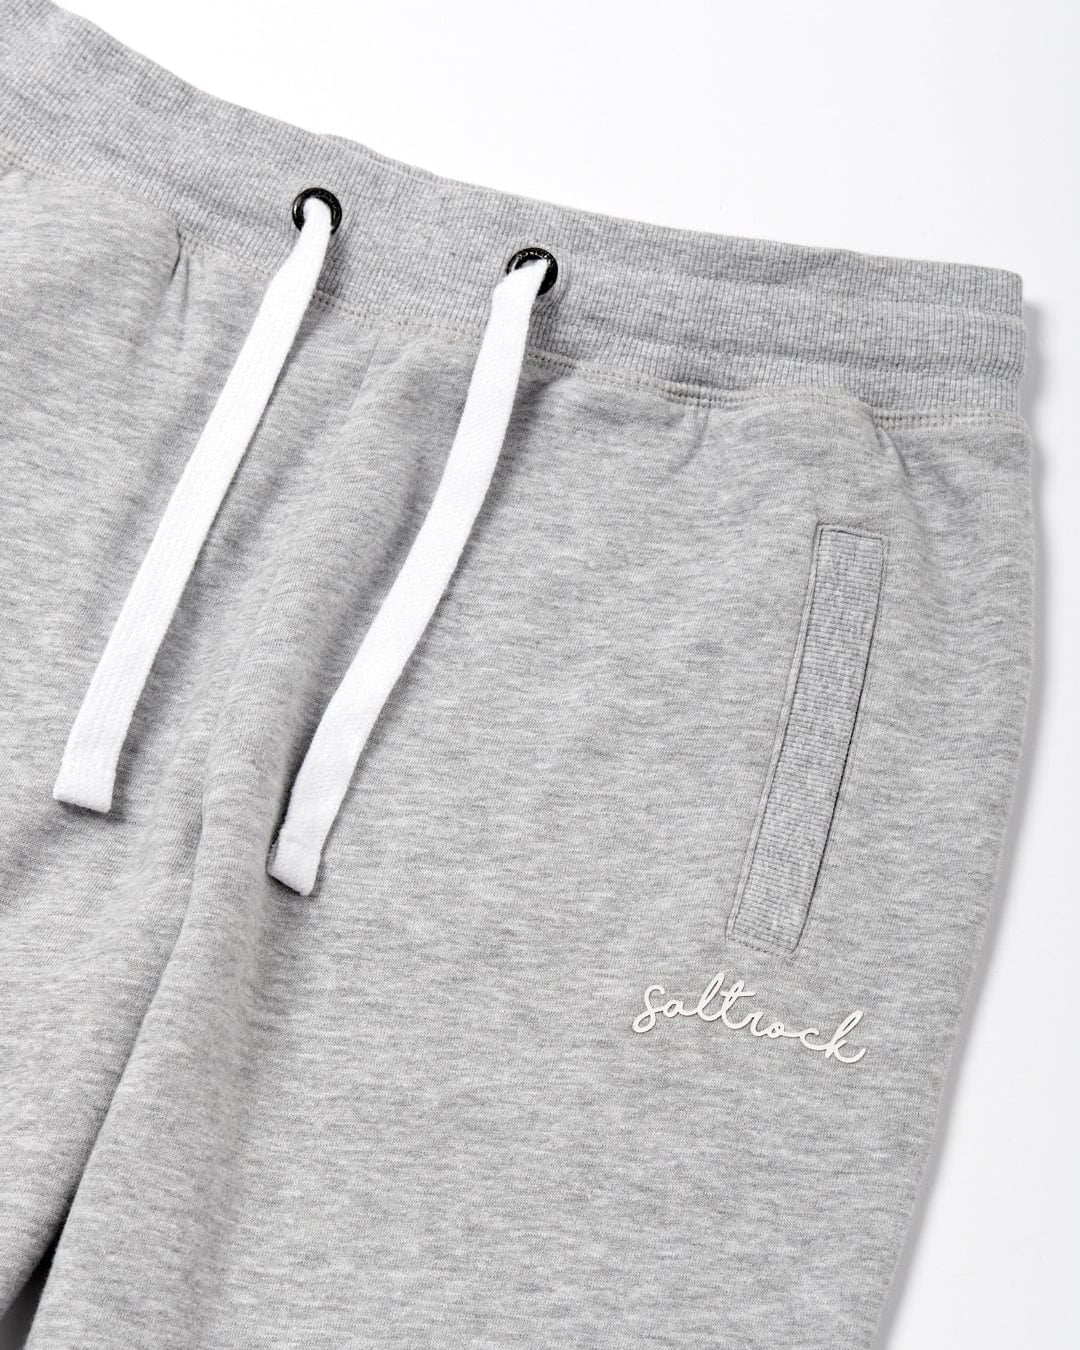 Women's elasticated waist joggers / sweatpants in light grey.